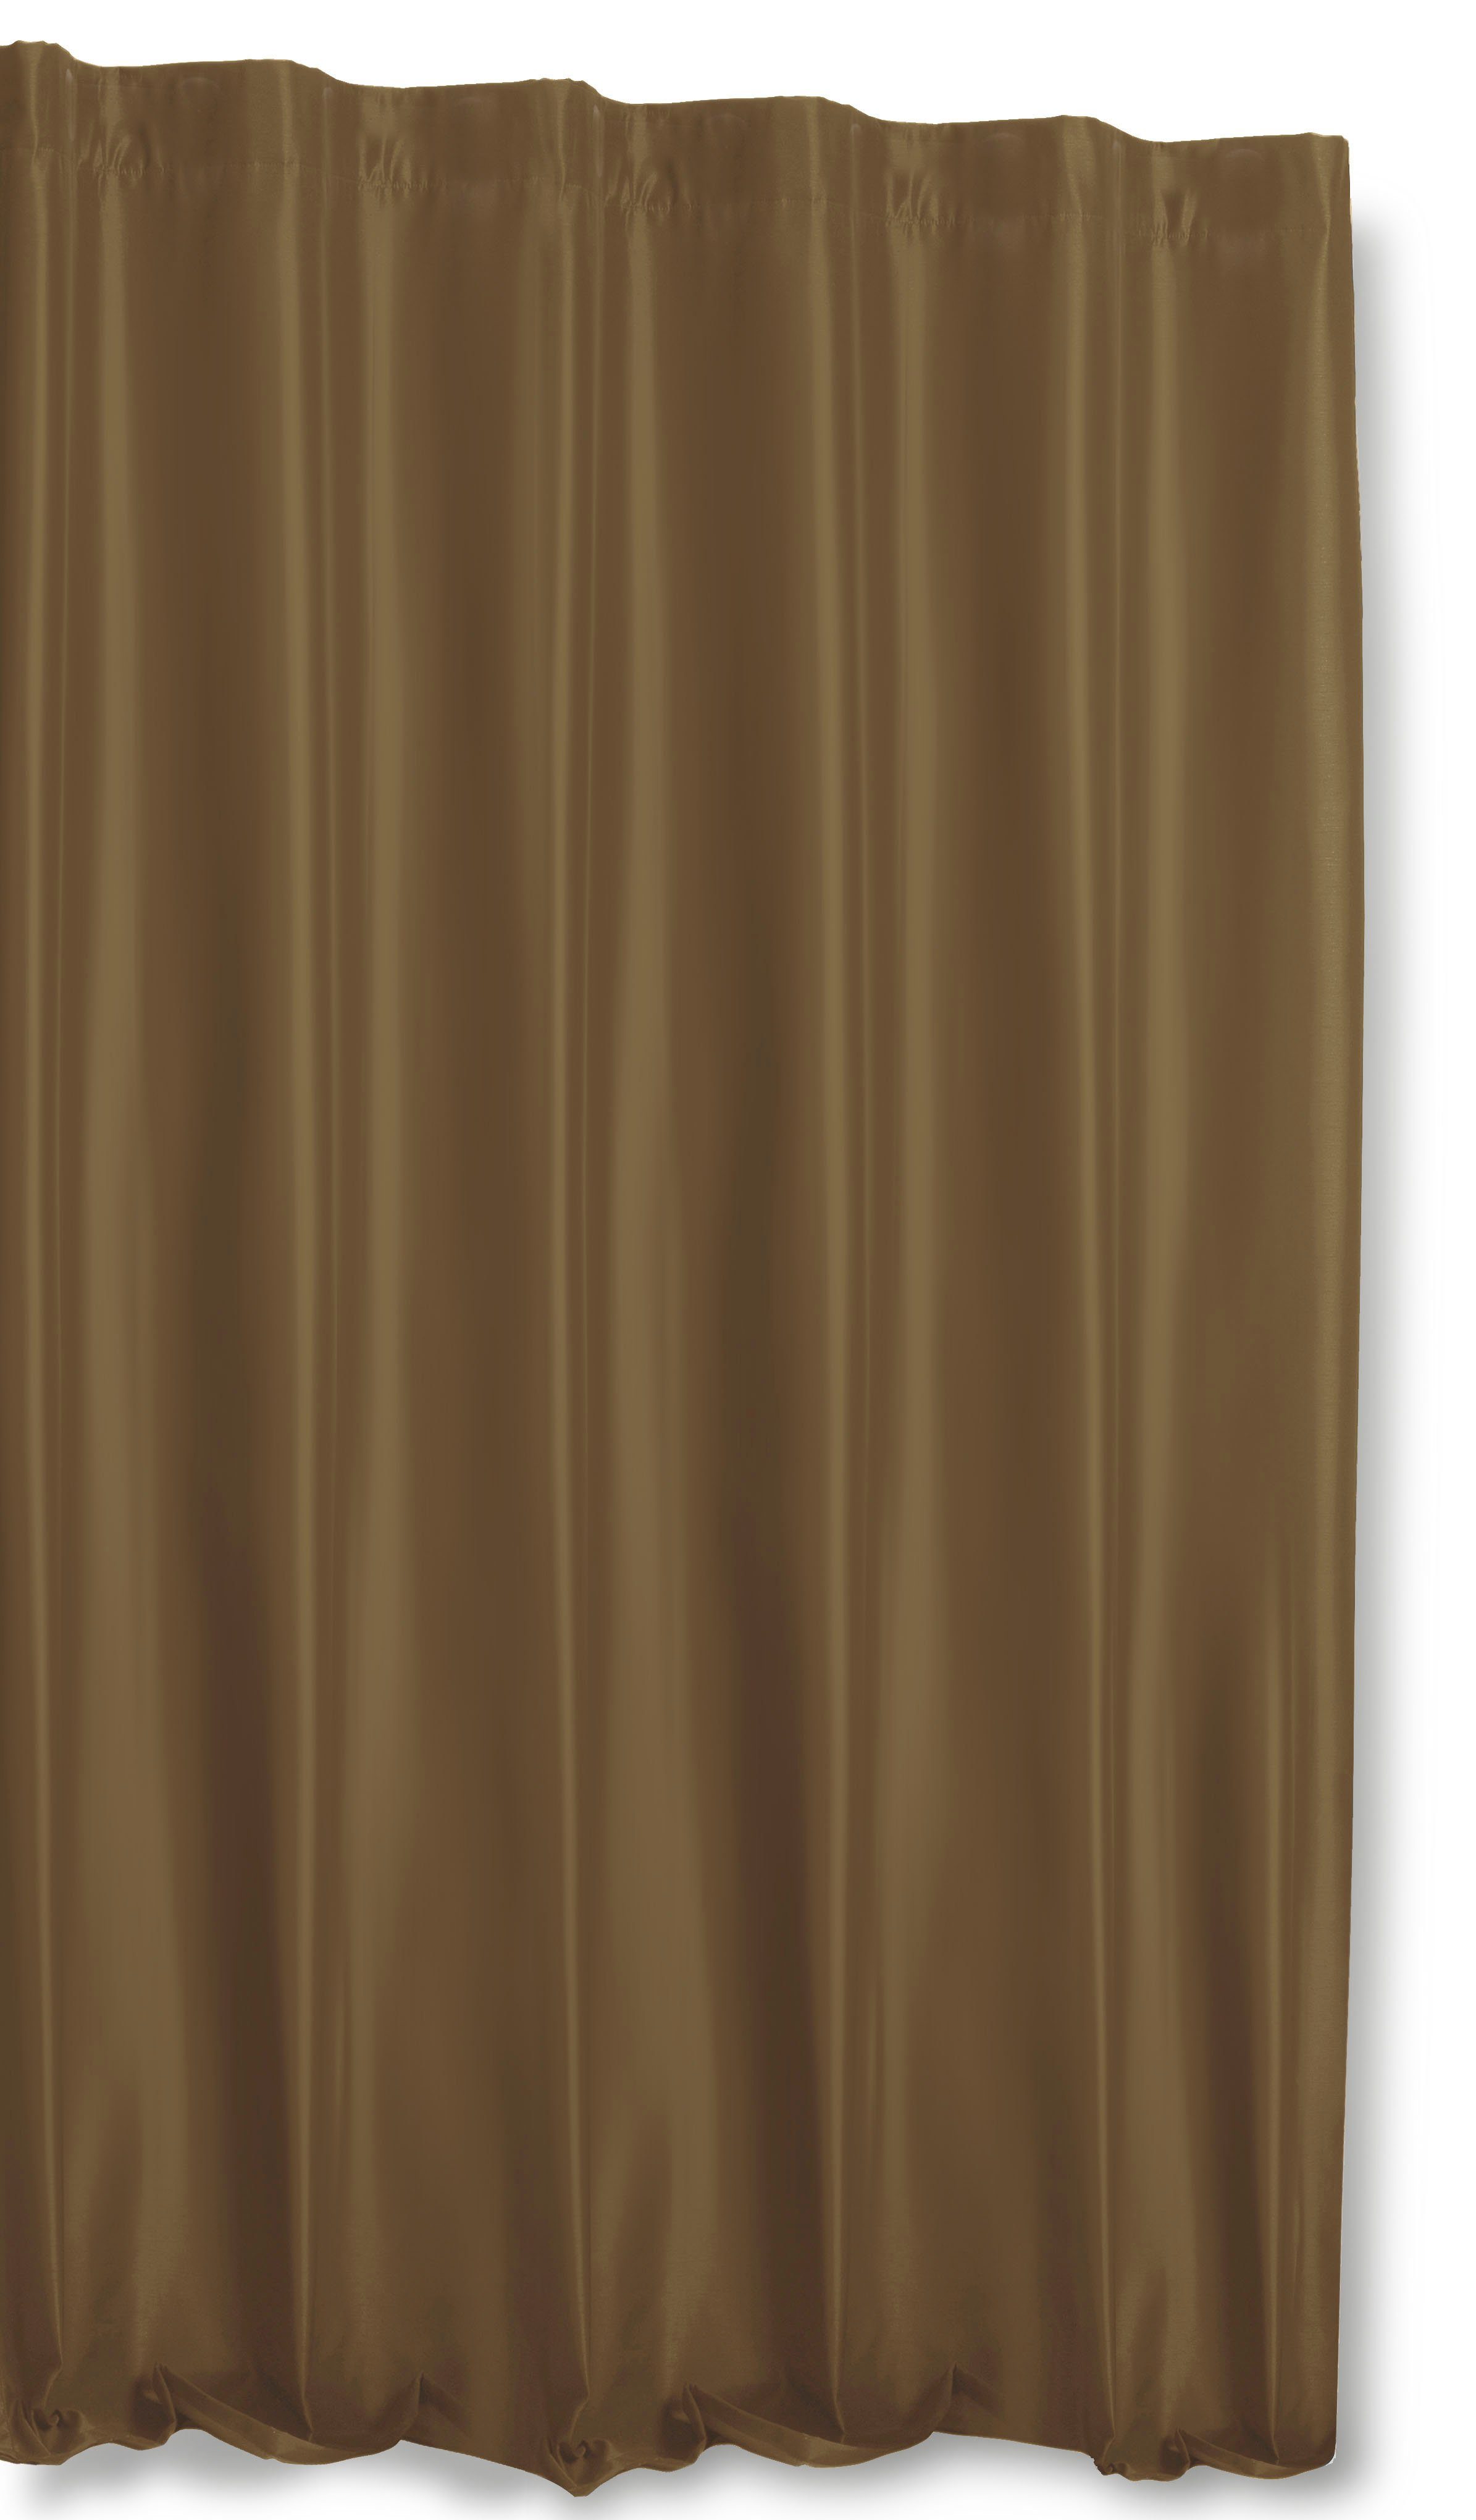 Kräuselband Thermo Taupehell Polyester (1 Haus Wildseid, Türvorhang St), und Vorhang Deko, extra blickdicht cm 245x245 Polar Fleece blickdicht, breit